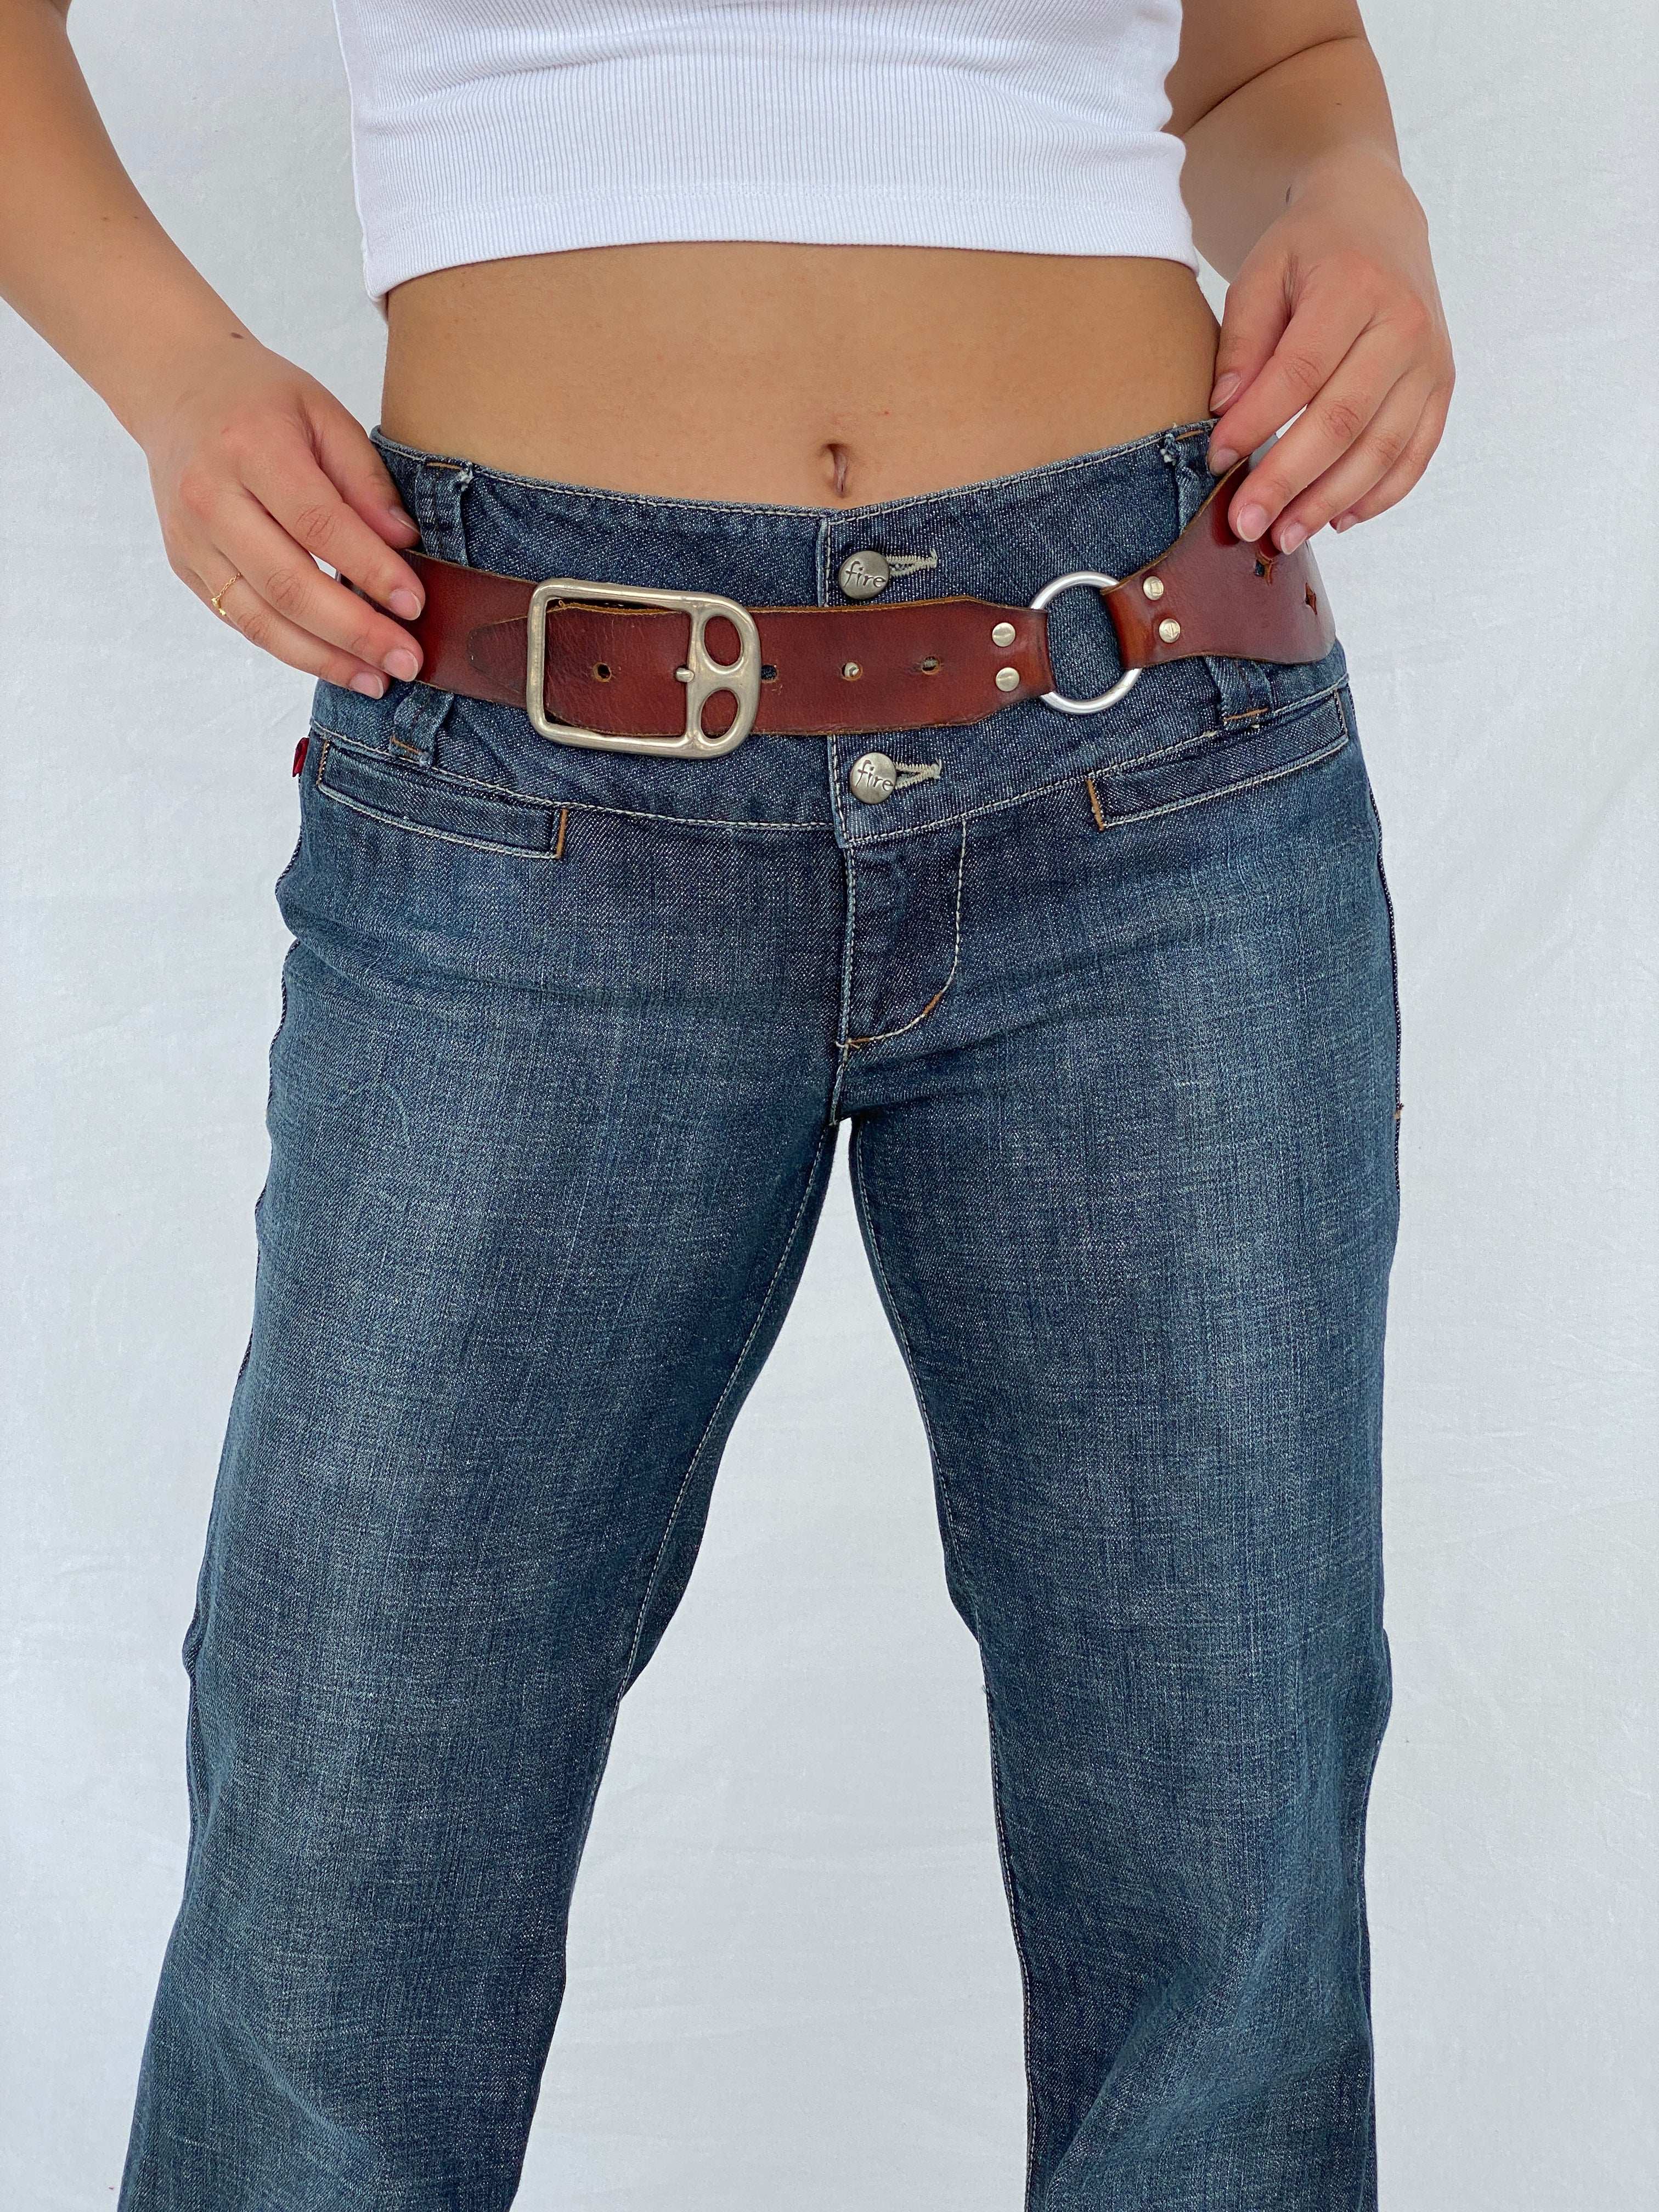 Vintage Western Cowboy Style Belt - Balagan Vintage Belt 90s, belt, cowboy, Lana, NEW IN